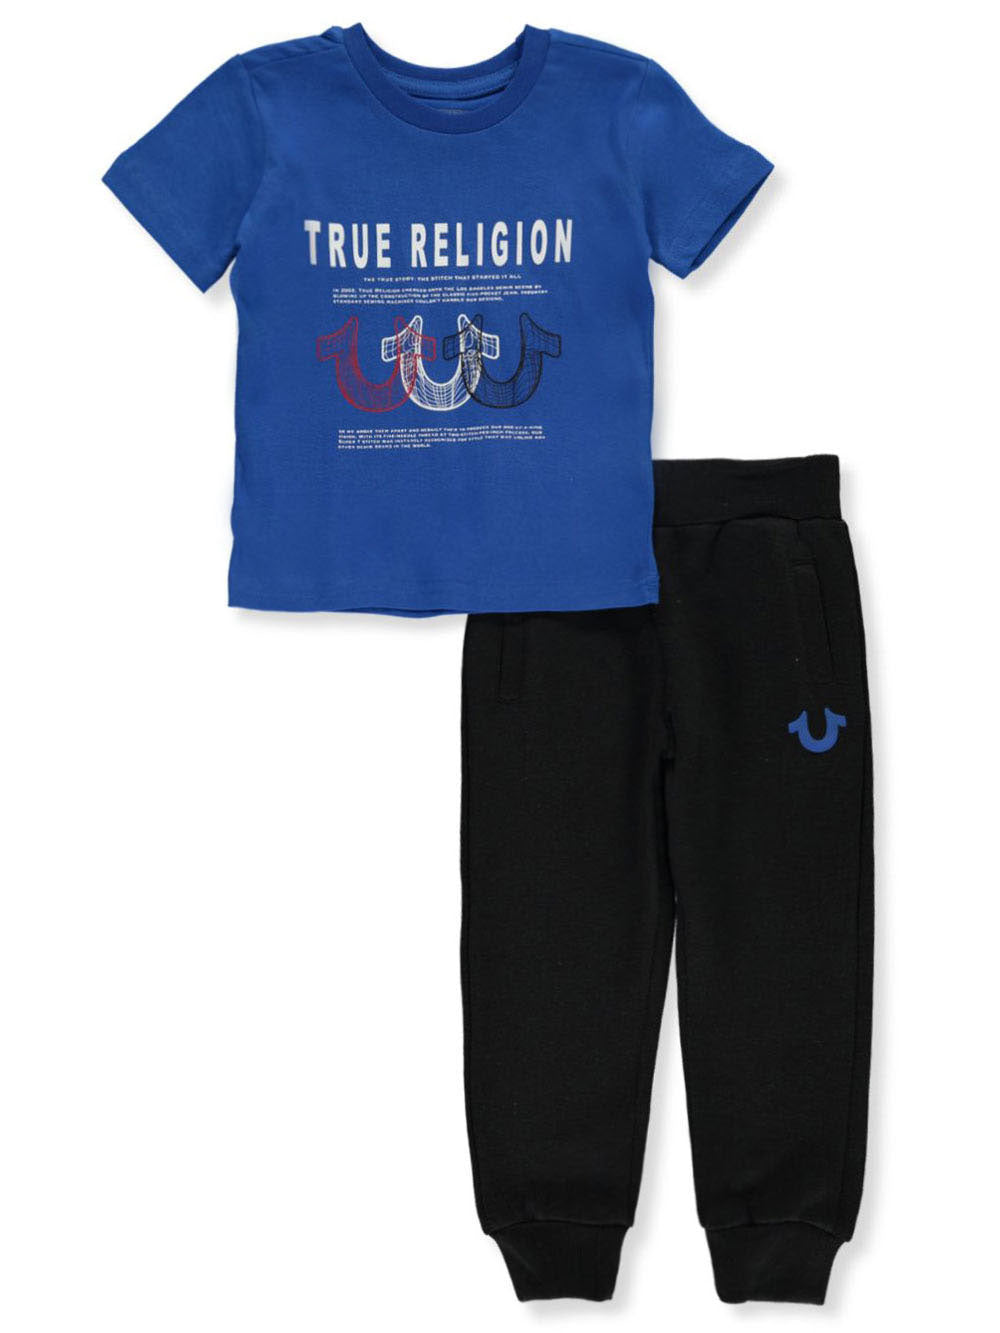 True Religion 2pc Jogger Set - FLY GUYZ